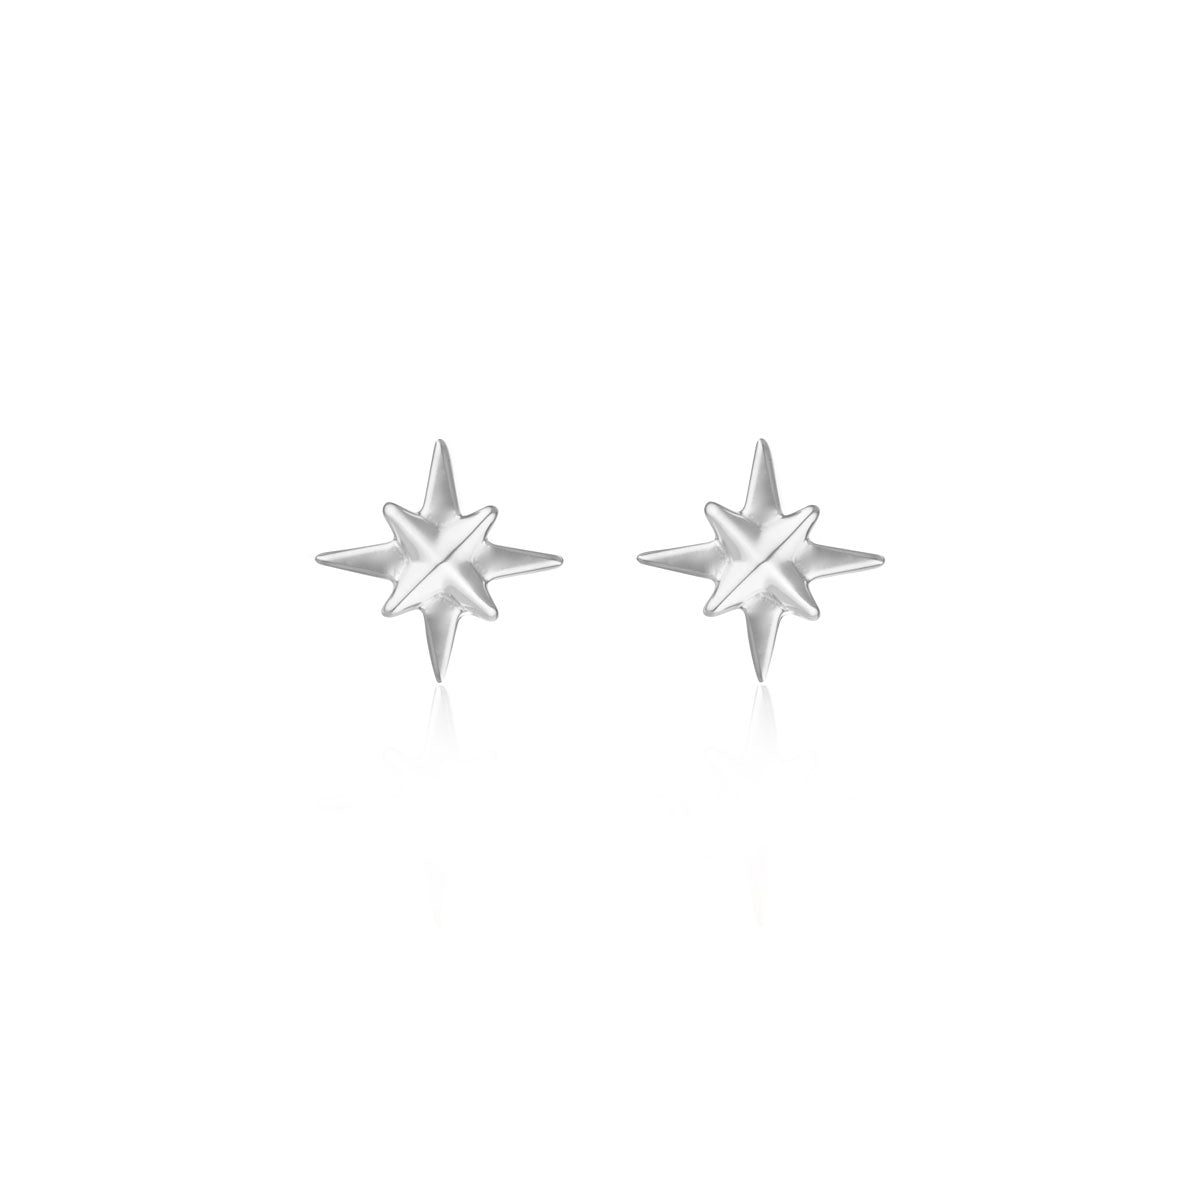 Linda Tahija North Star Stud Earrings, Gold or Silver